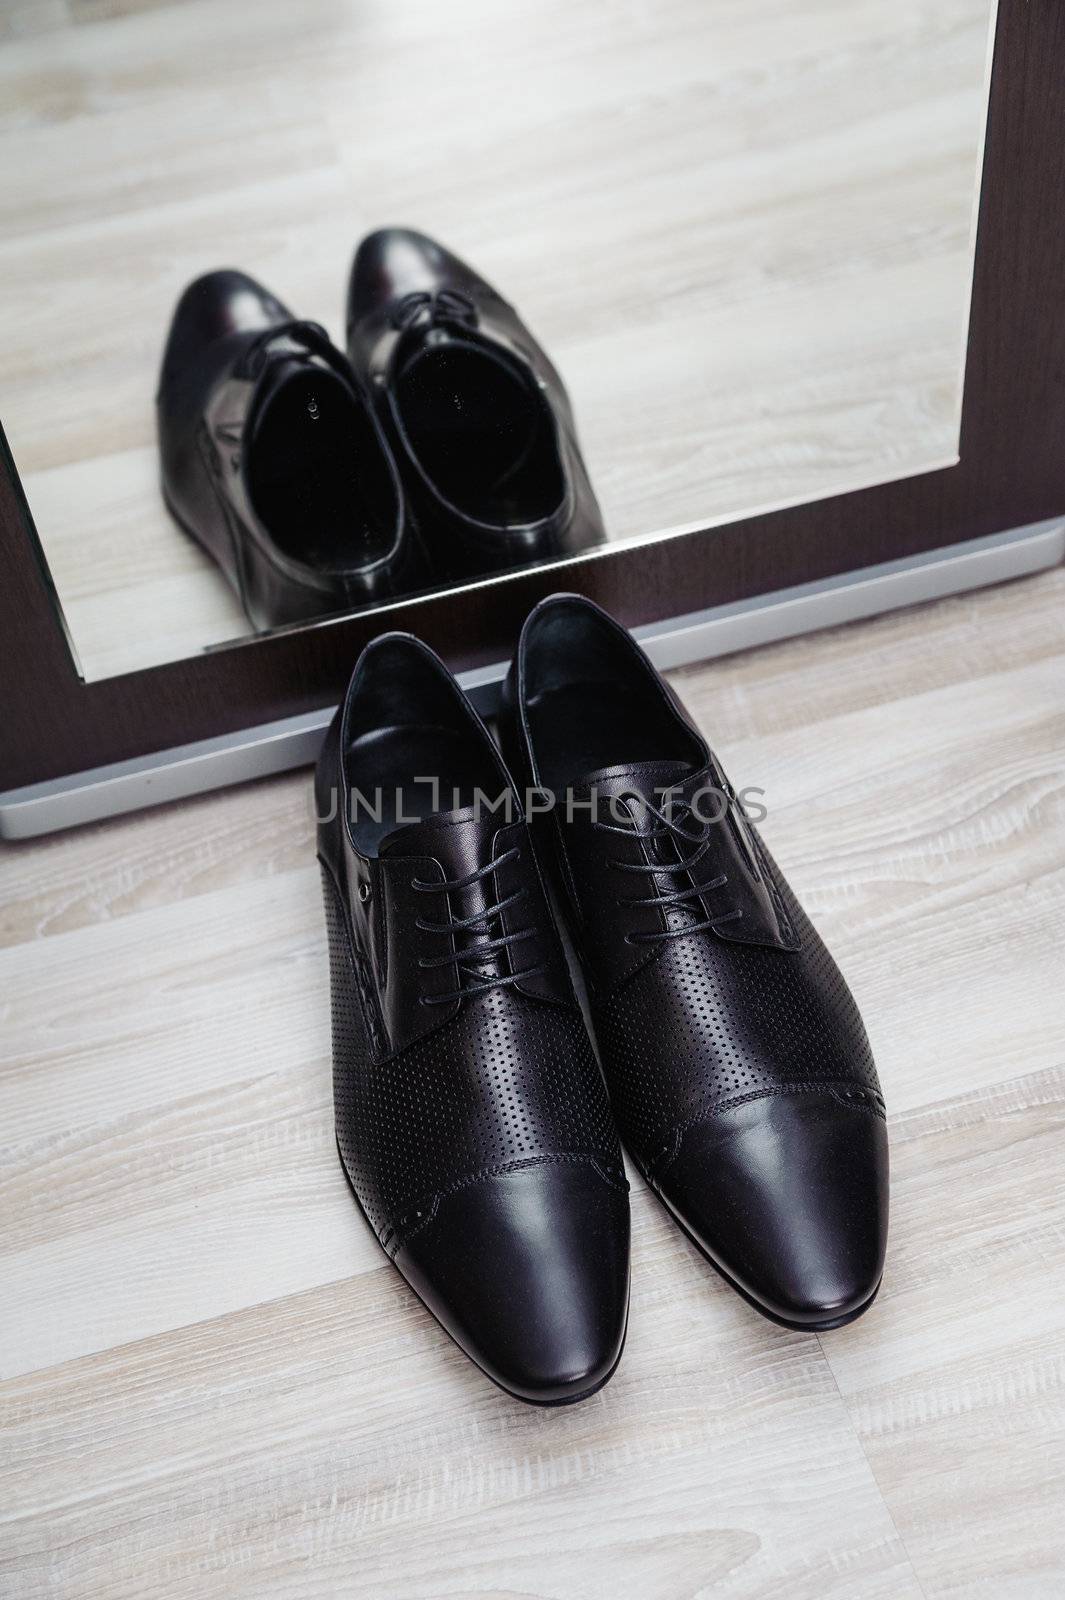 new stylish man shoe with mirror reflection